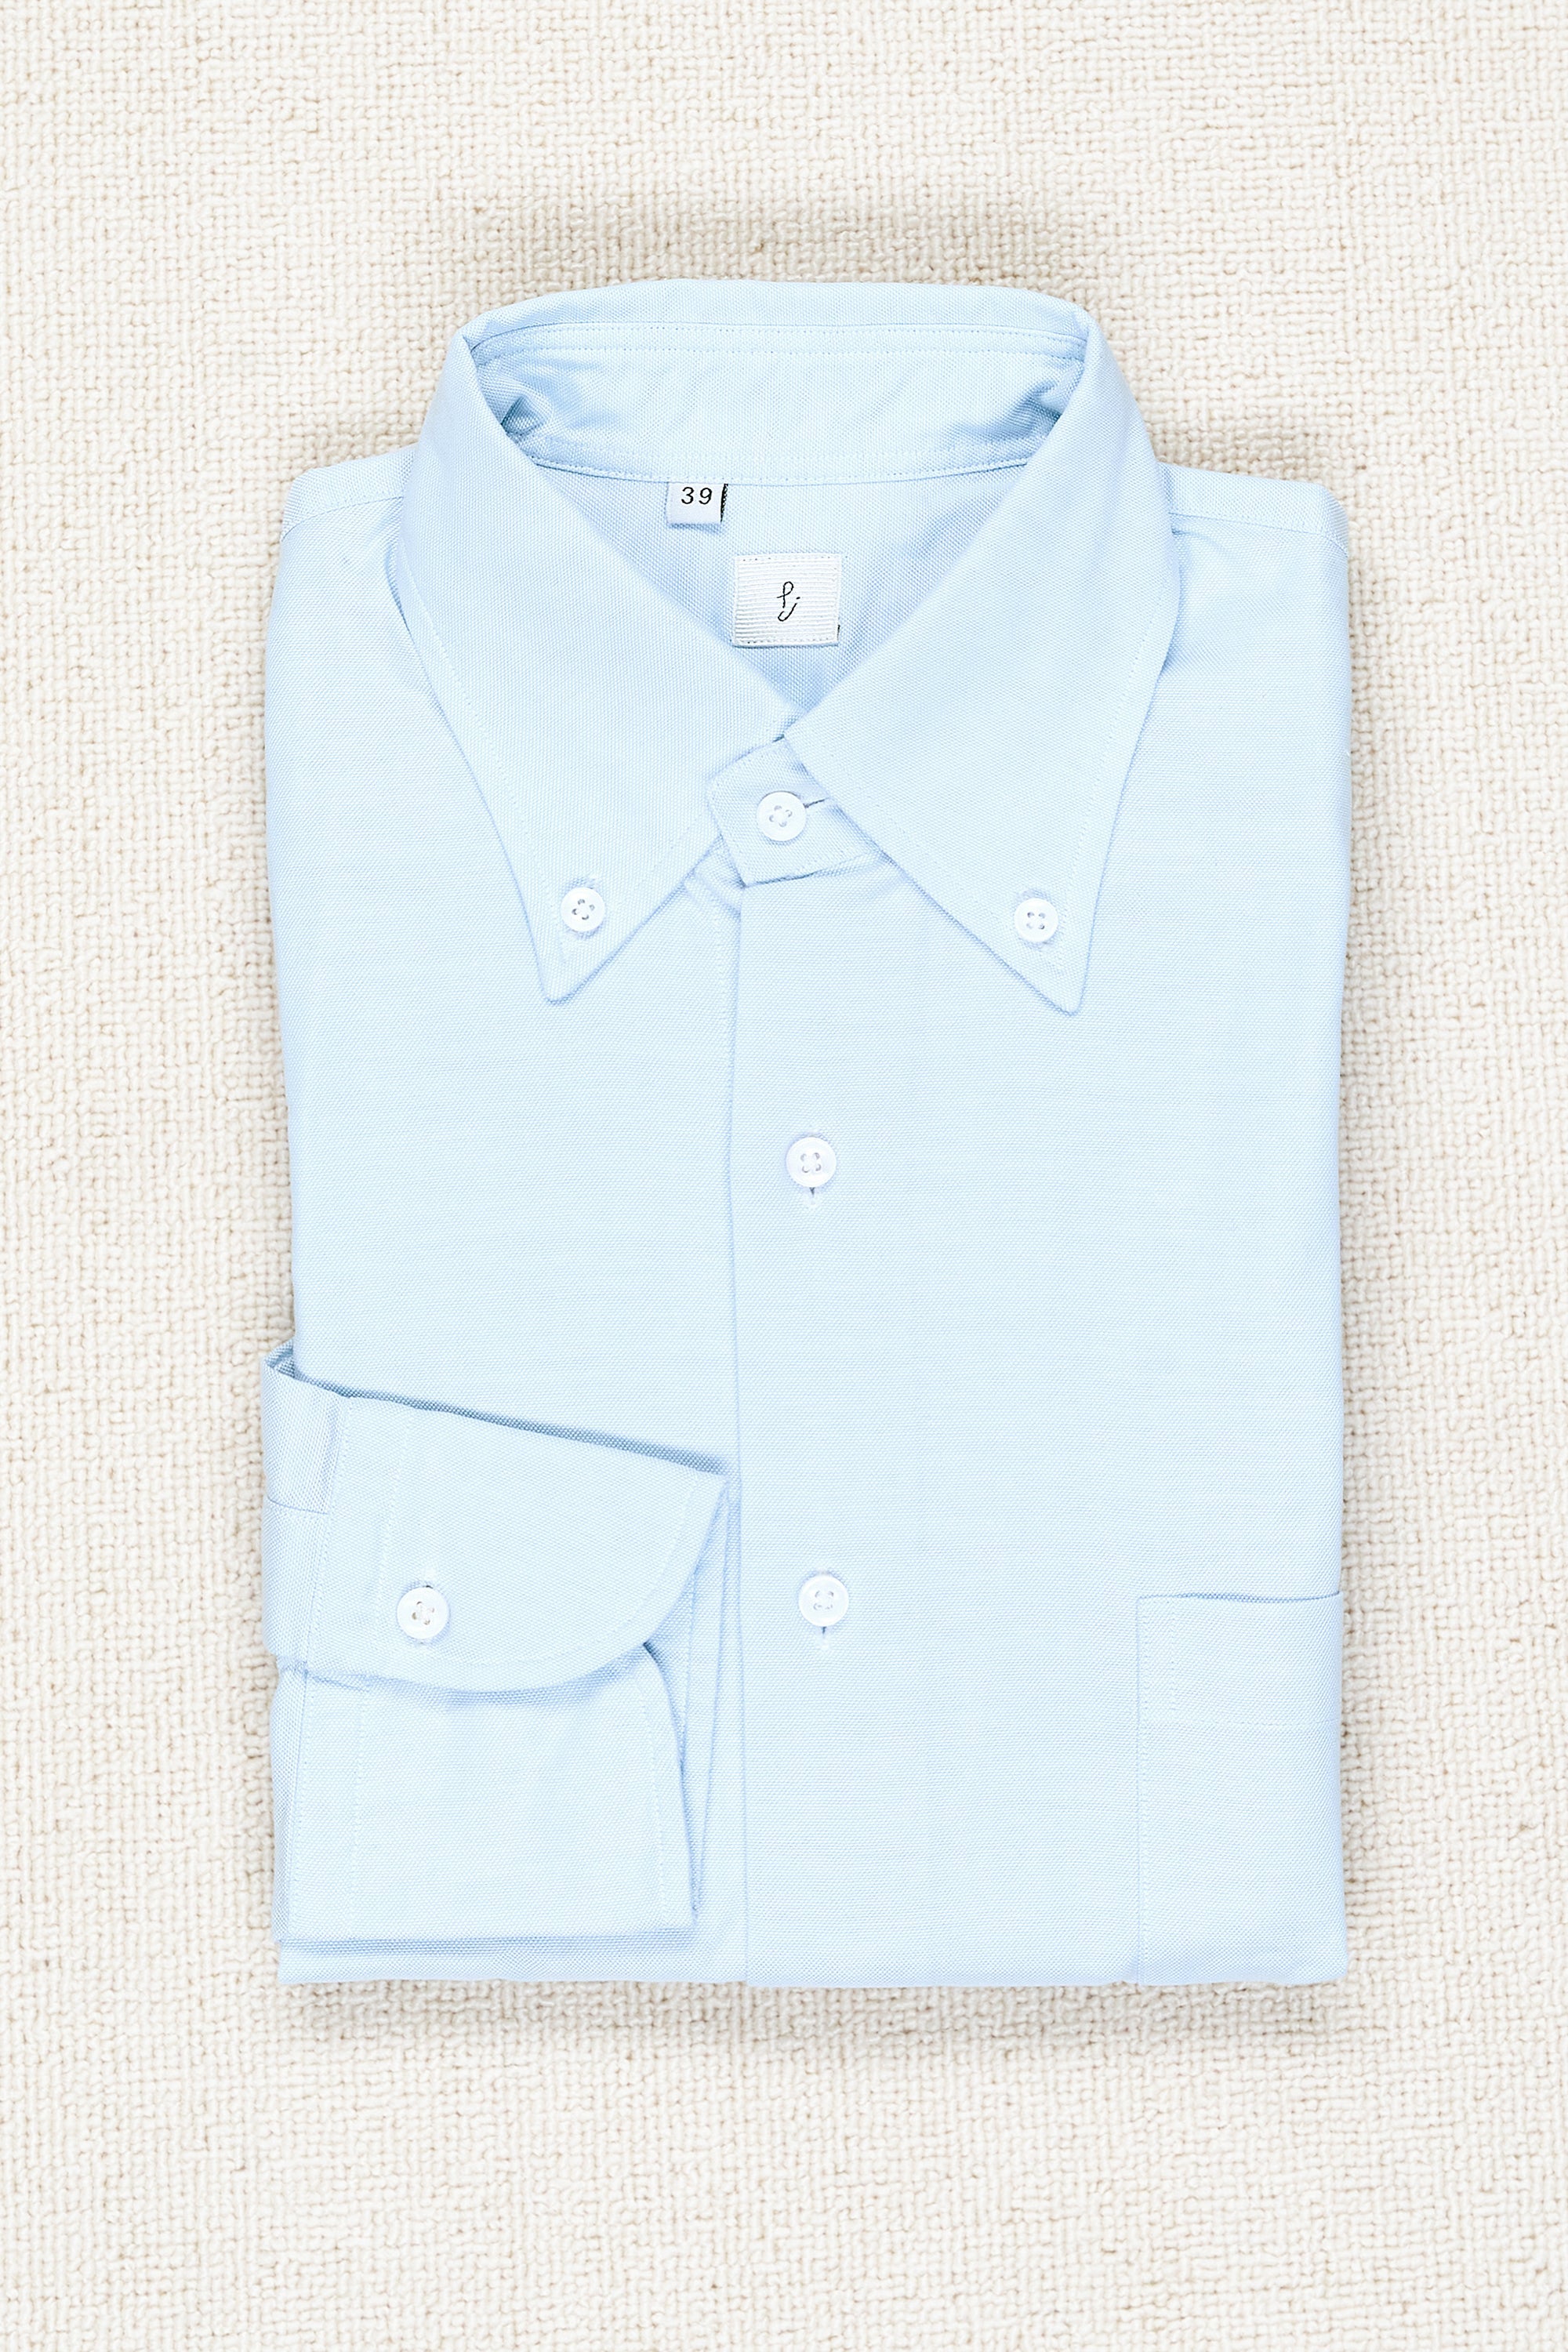 P. Johnson Blue Cotton Button Down Shirt